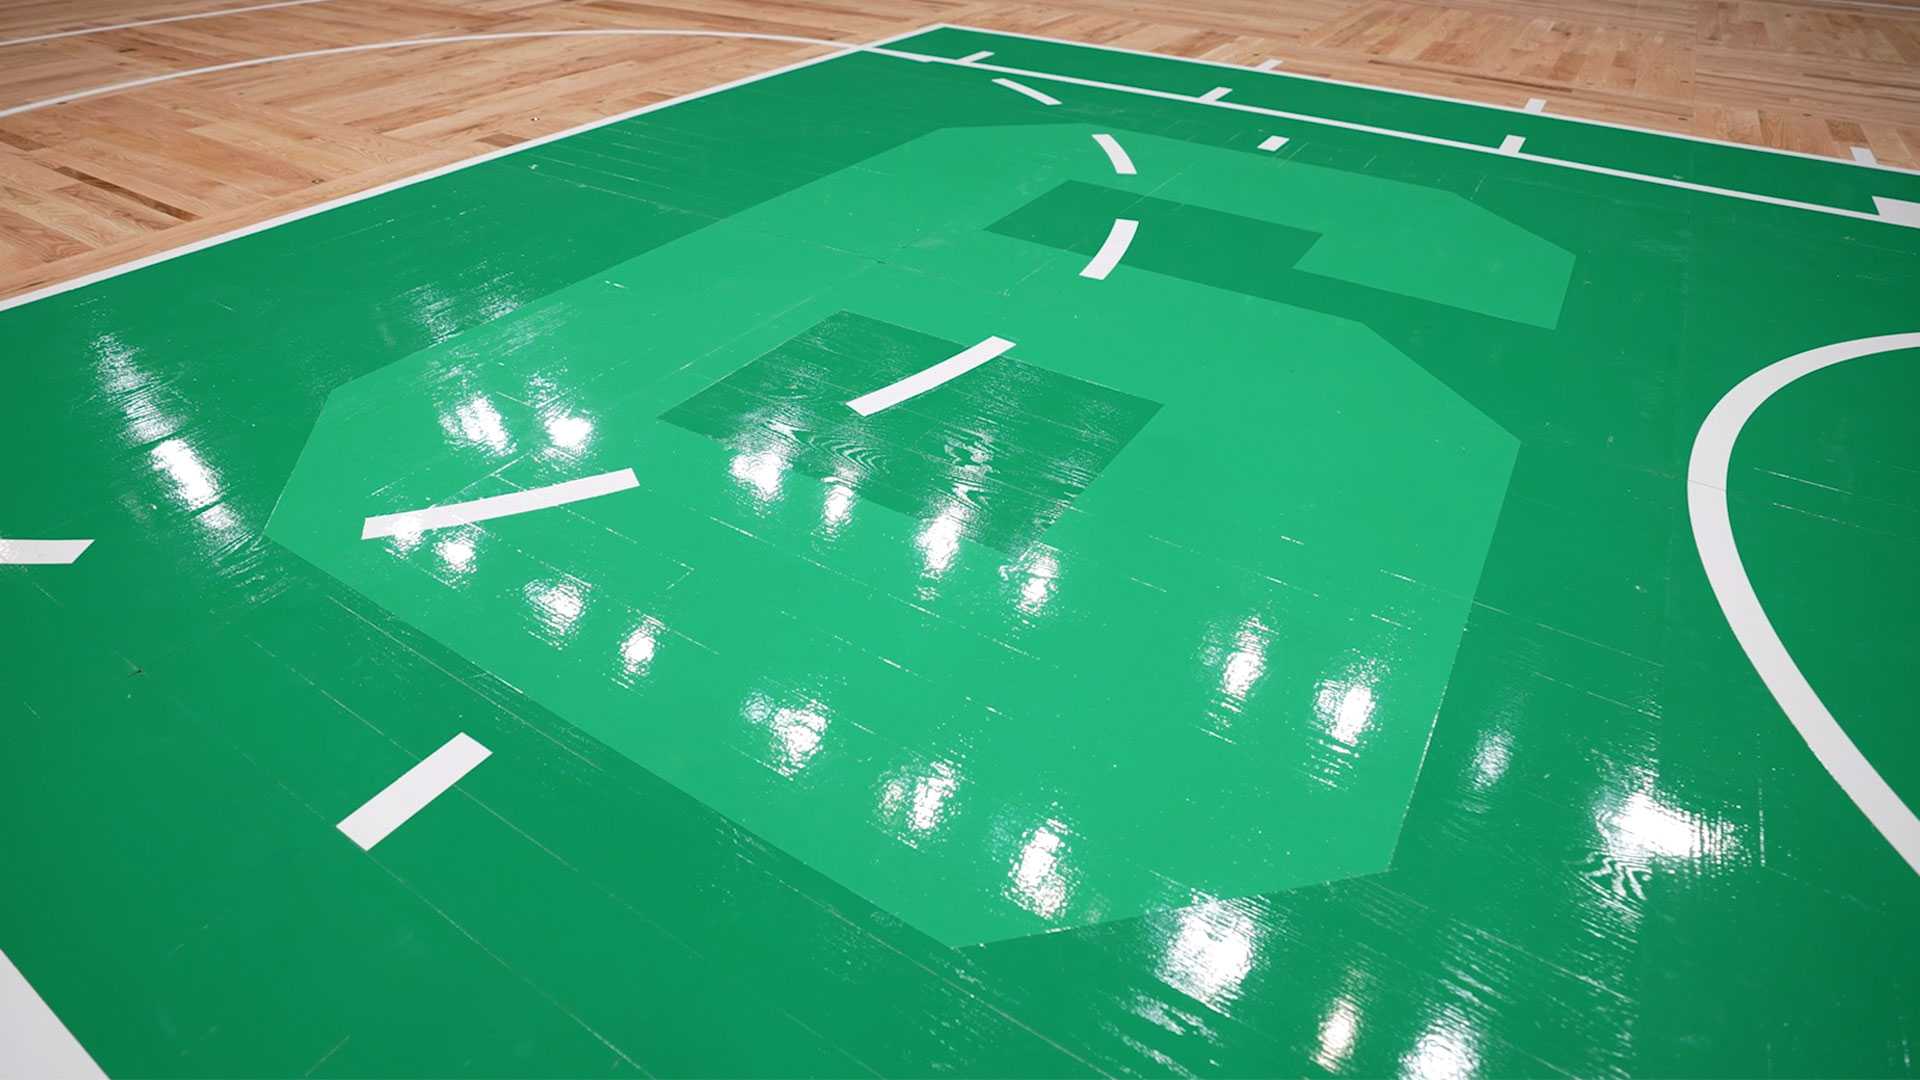 Boston Garden: the greenest of the NBA